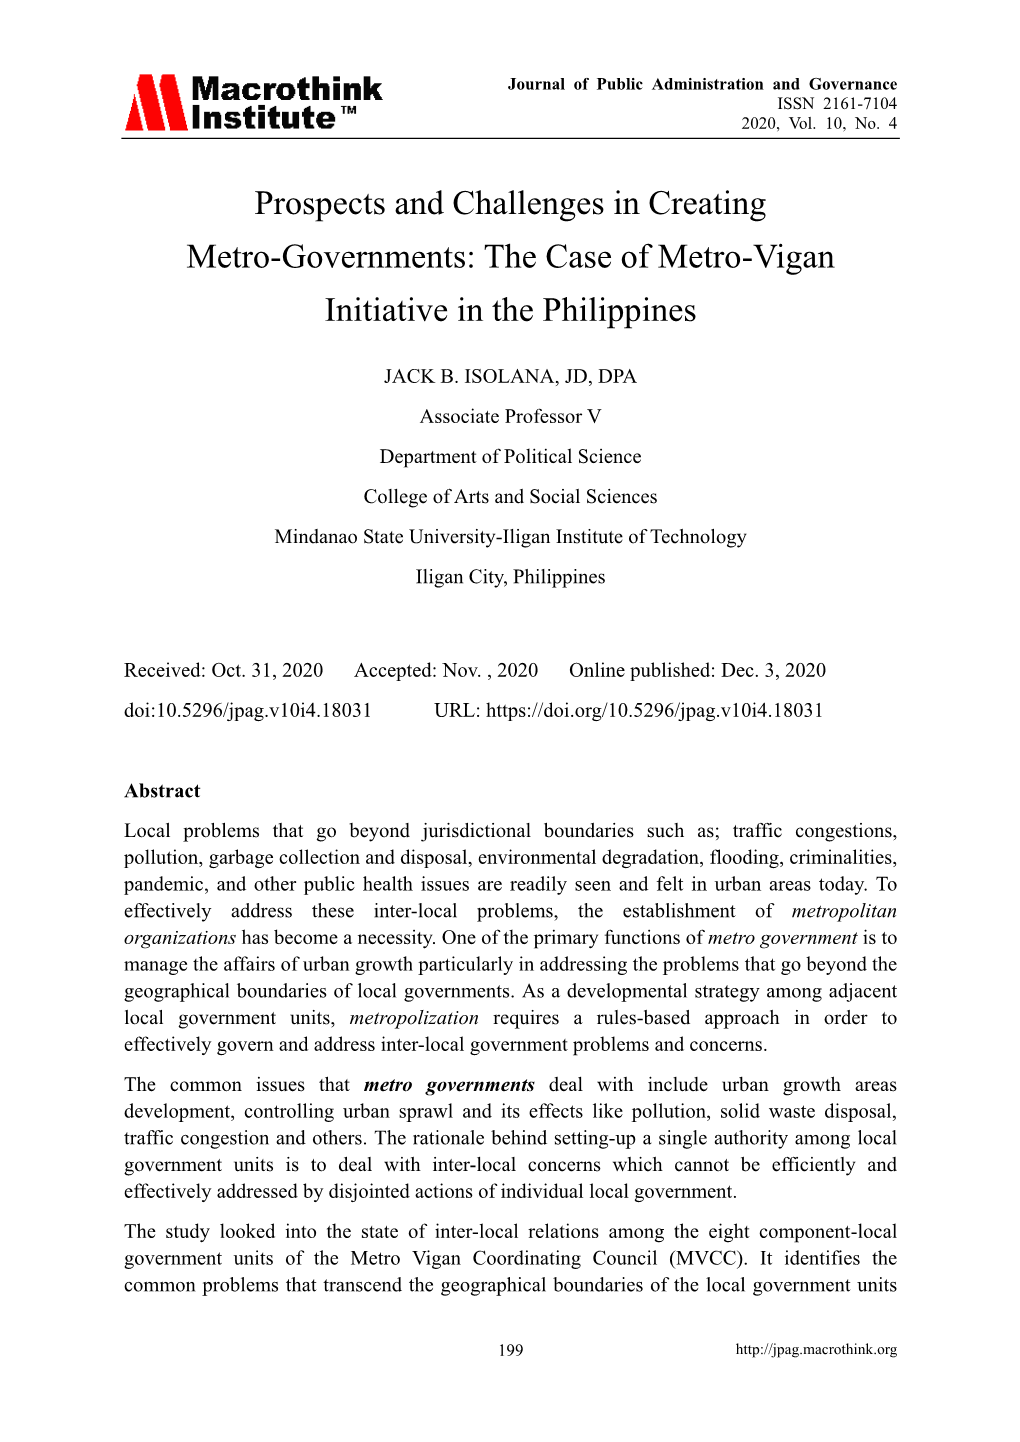 The Case of Metro-Vigan Initiative in the Philippines